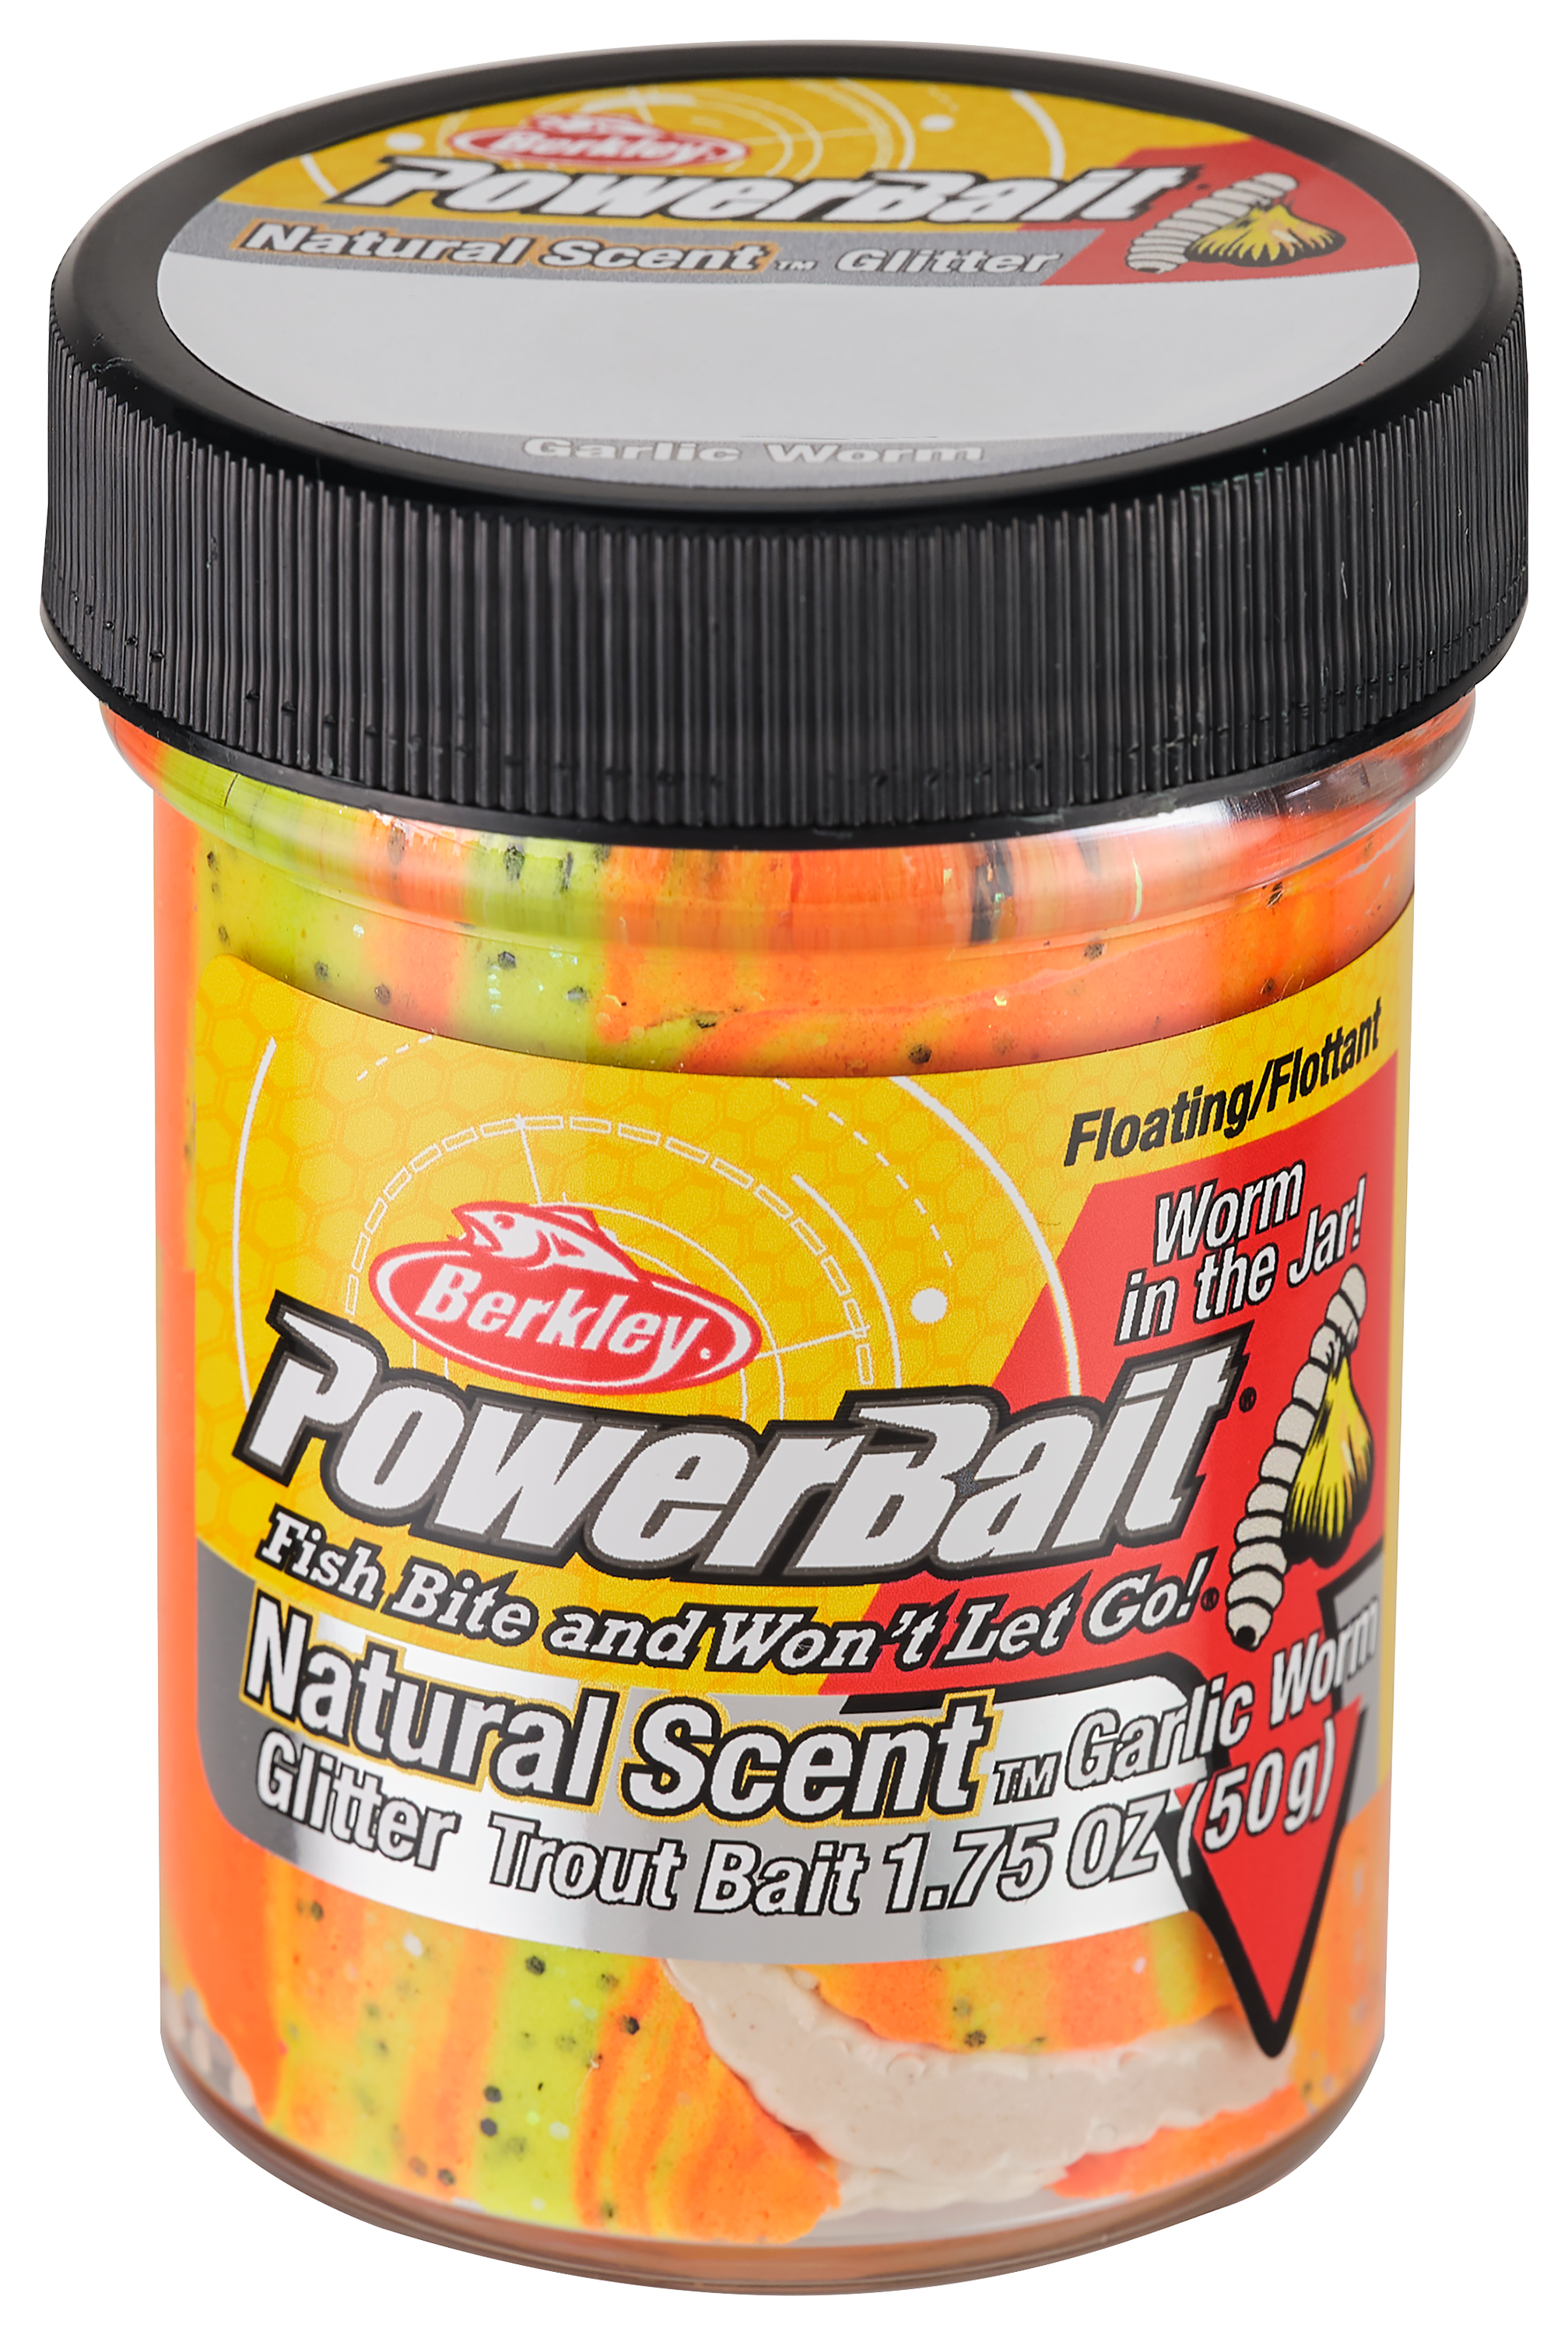 Berkley PowerBait Natural Scent Trout Bait, Garlic, 1.75 oz : Artificial  Fishing Bait : Sports & Outdoors 